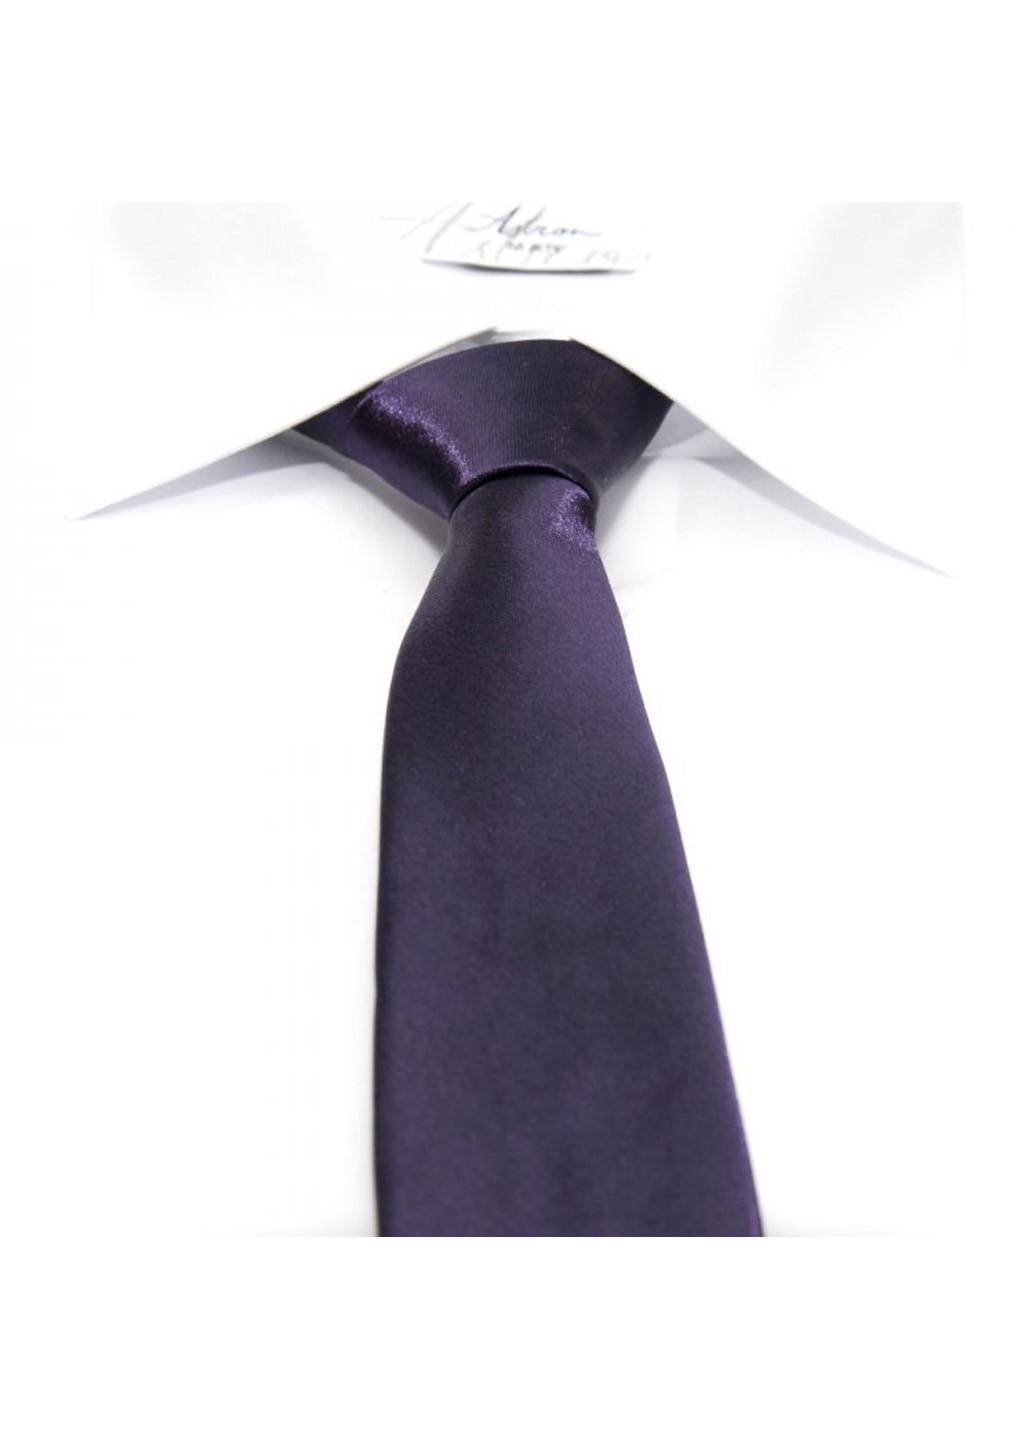 Мужской галстук 5 см Handmade (191128216)